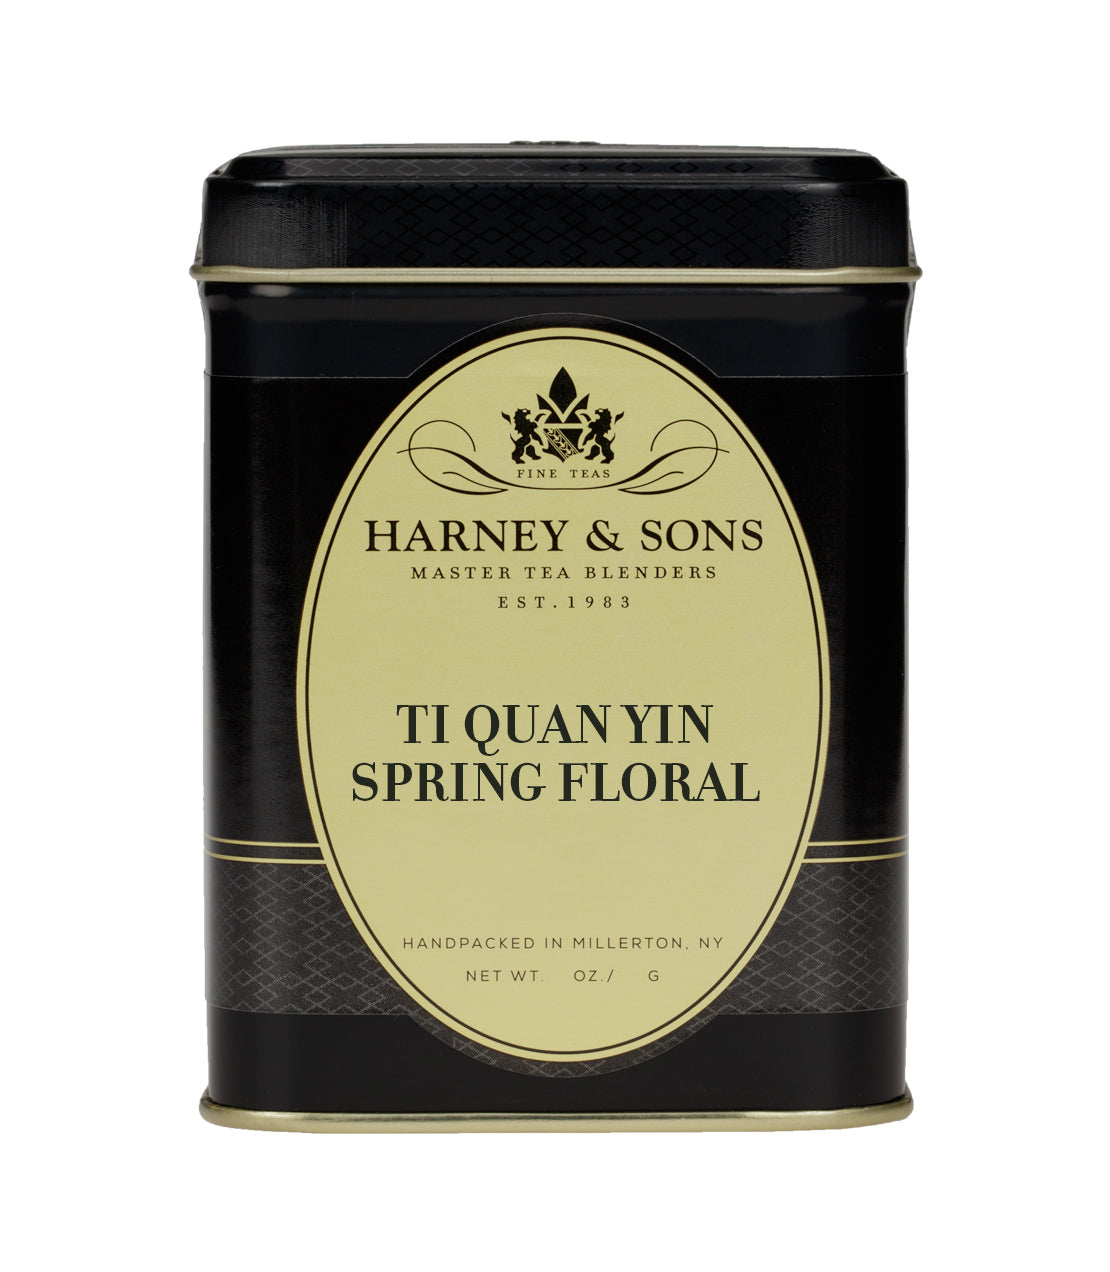 Ti Quan Yin Spring Floral - Loose 2 oz. Tin - Harney & Sons Fine Teas